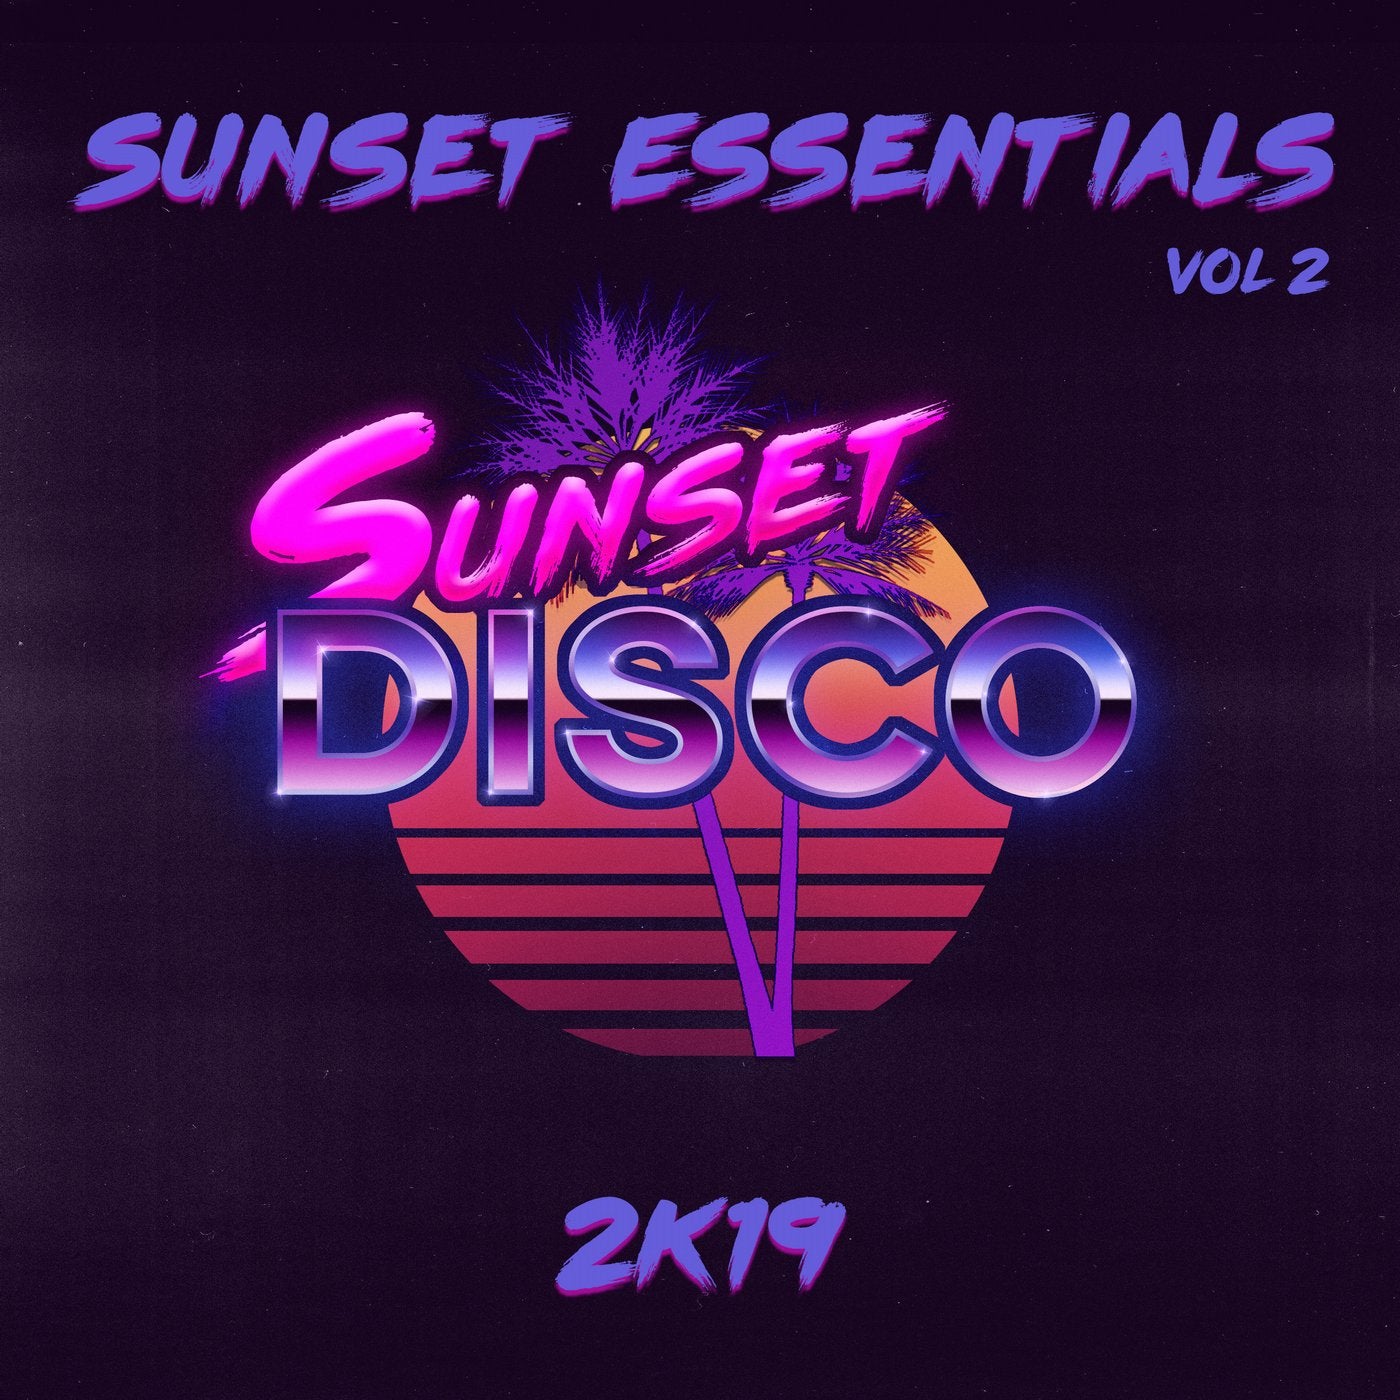 Sunset Essentials 2k19 Vol. 2